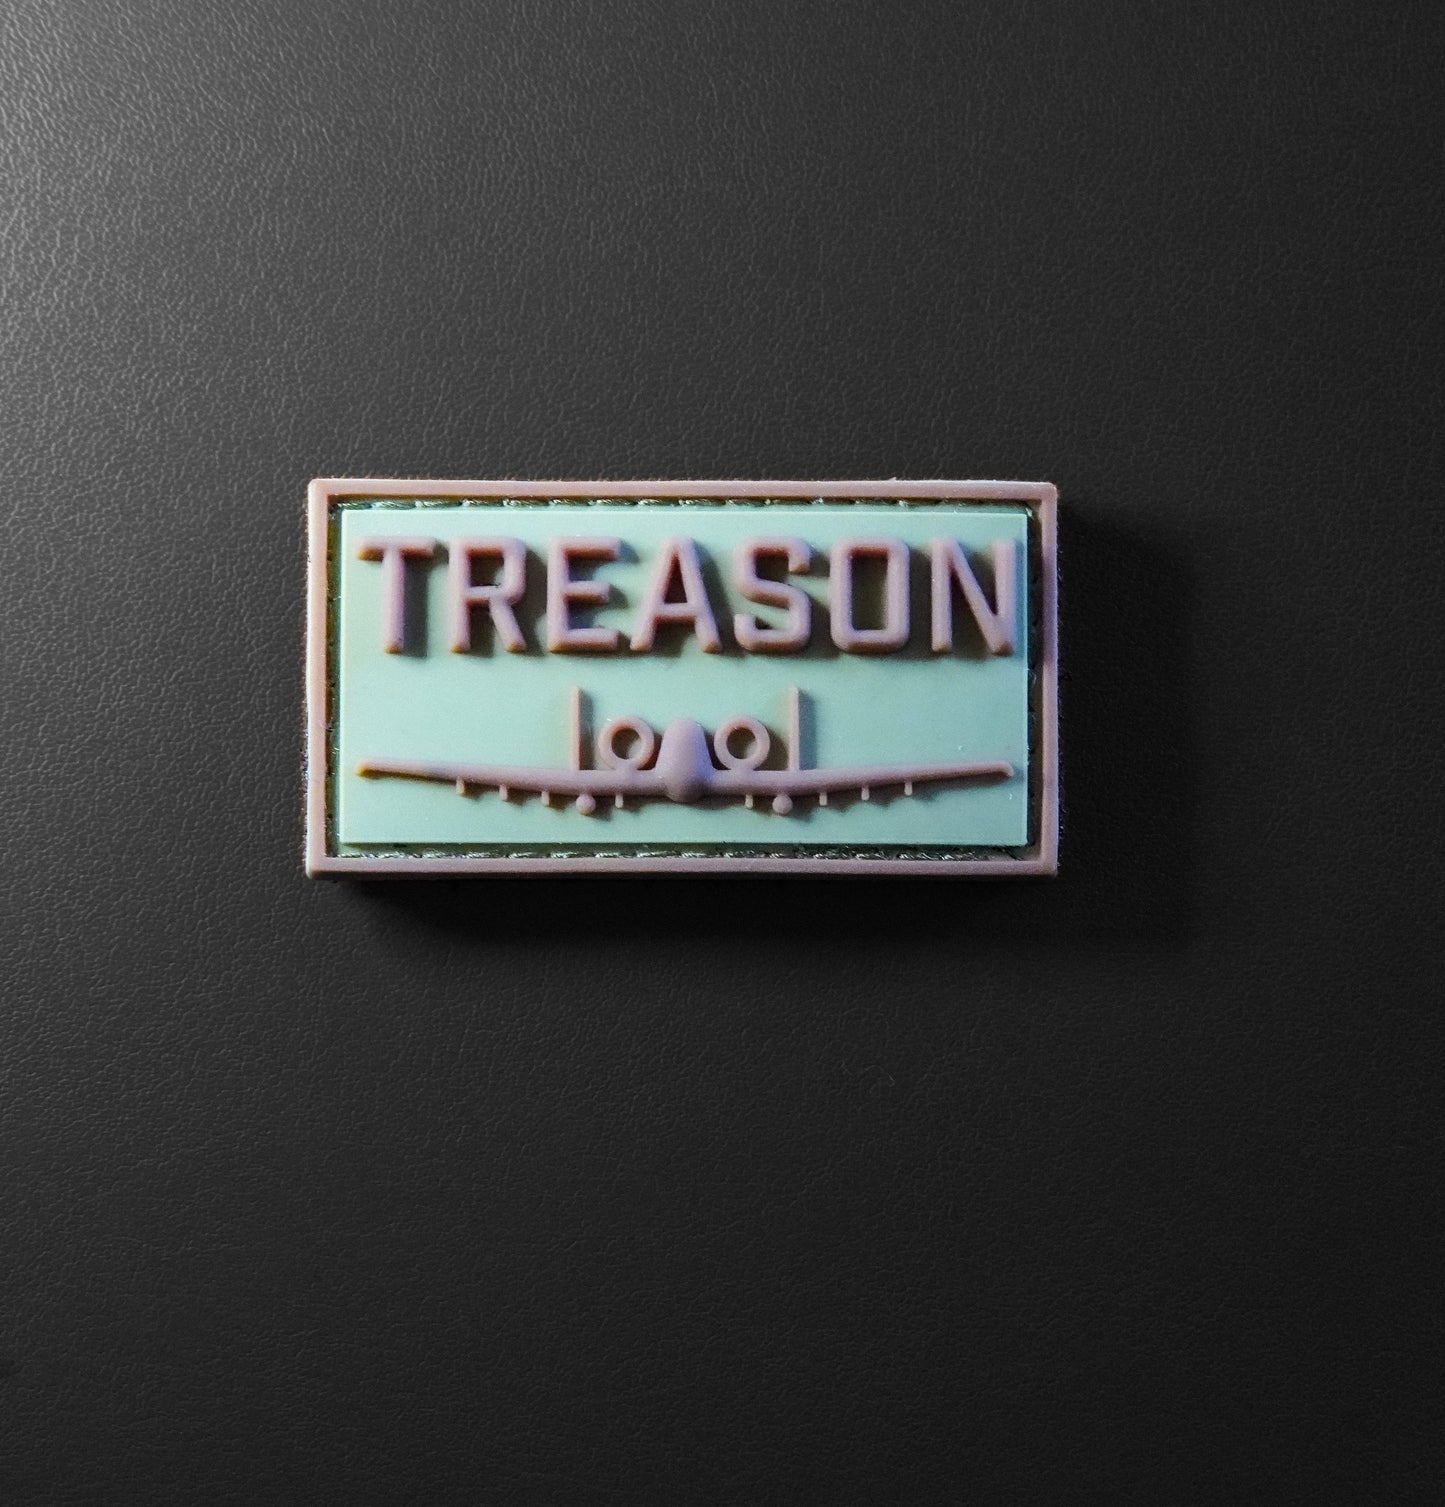 A-10 Treason Desert Patch